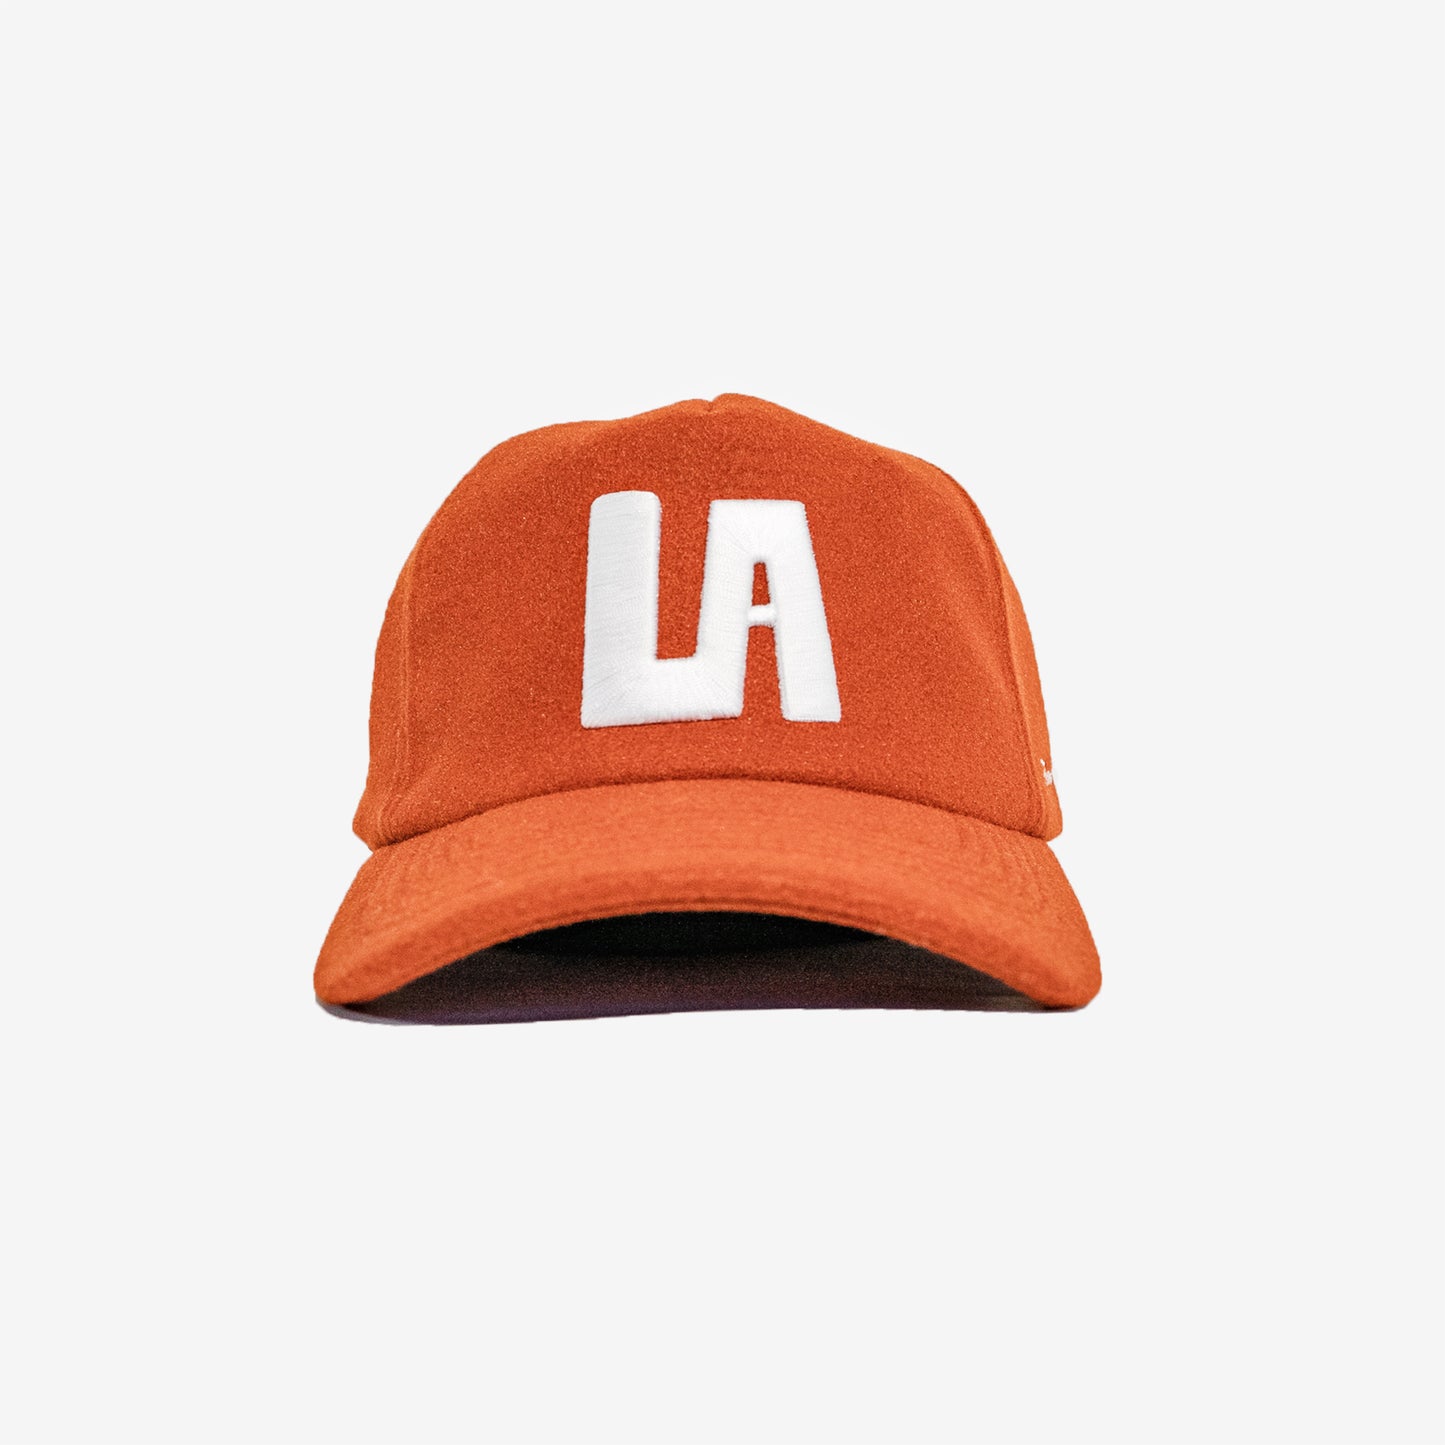 The "LA" Block Hat